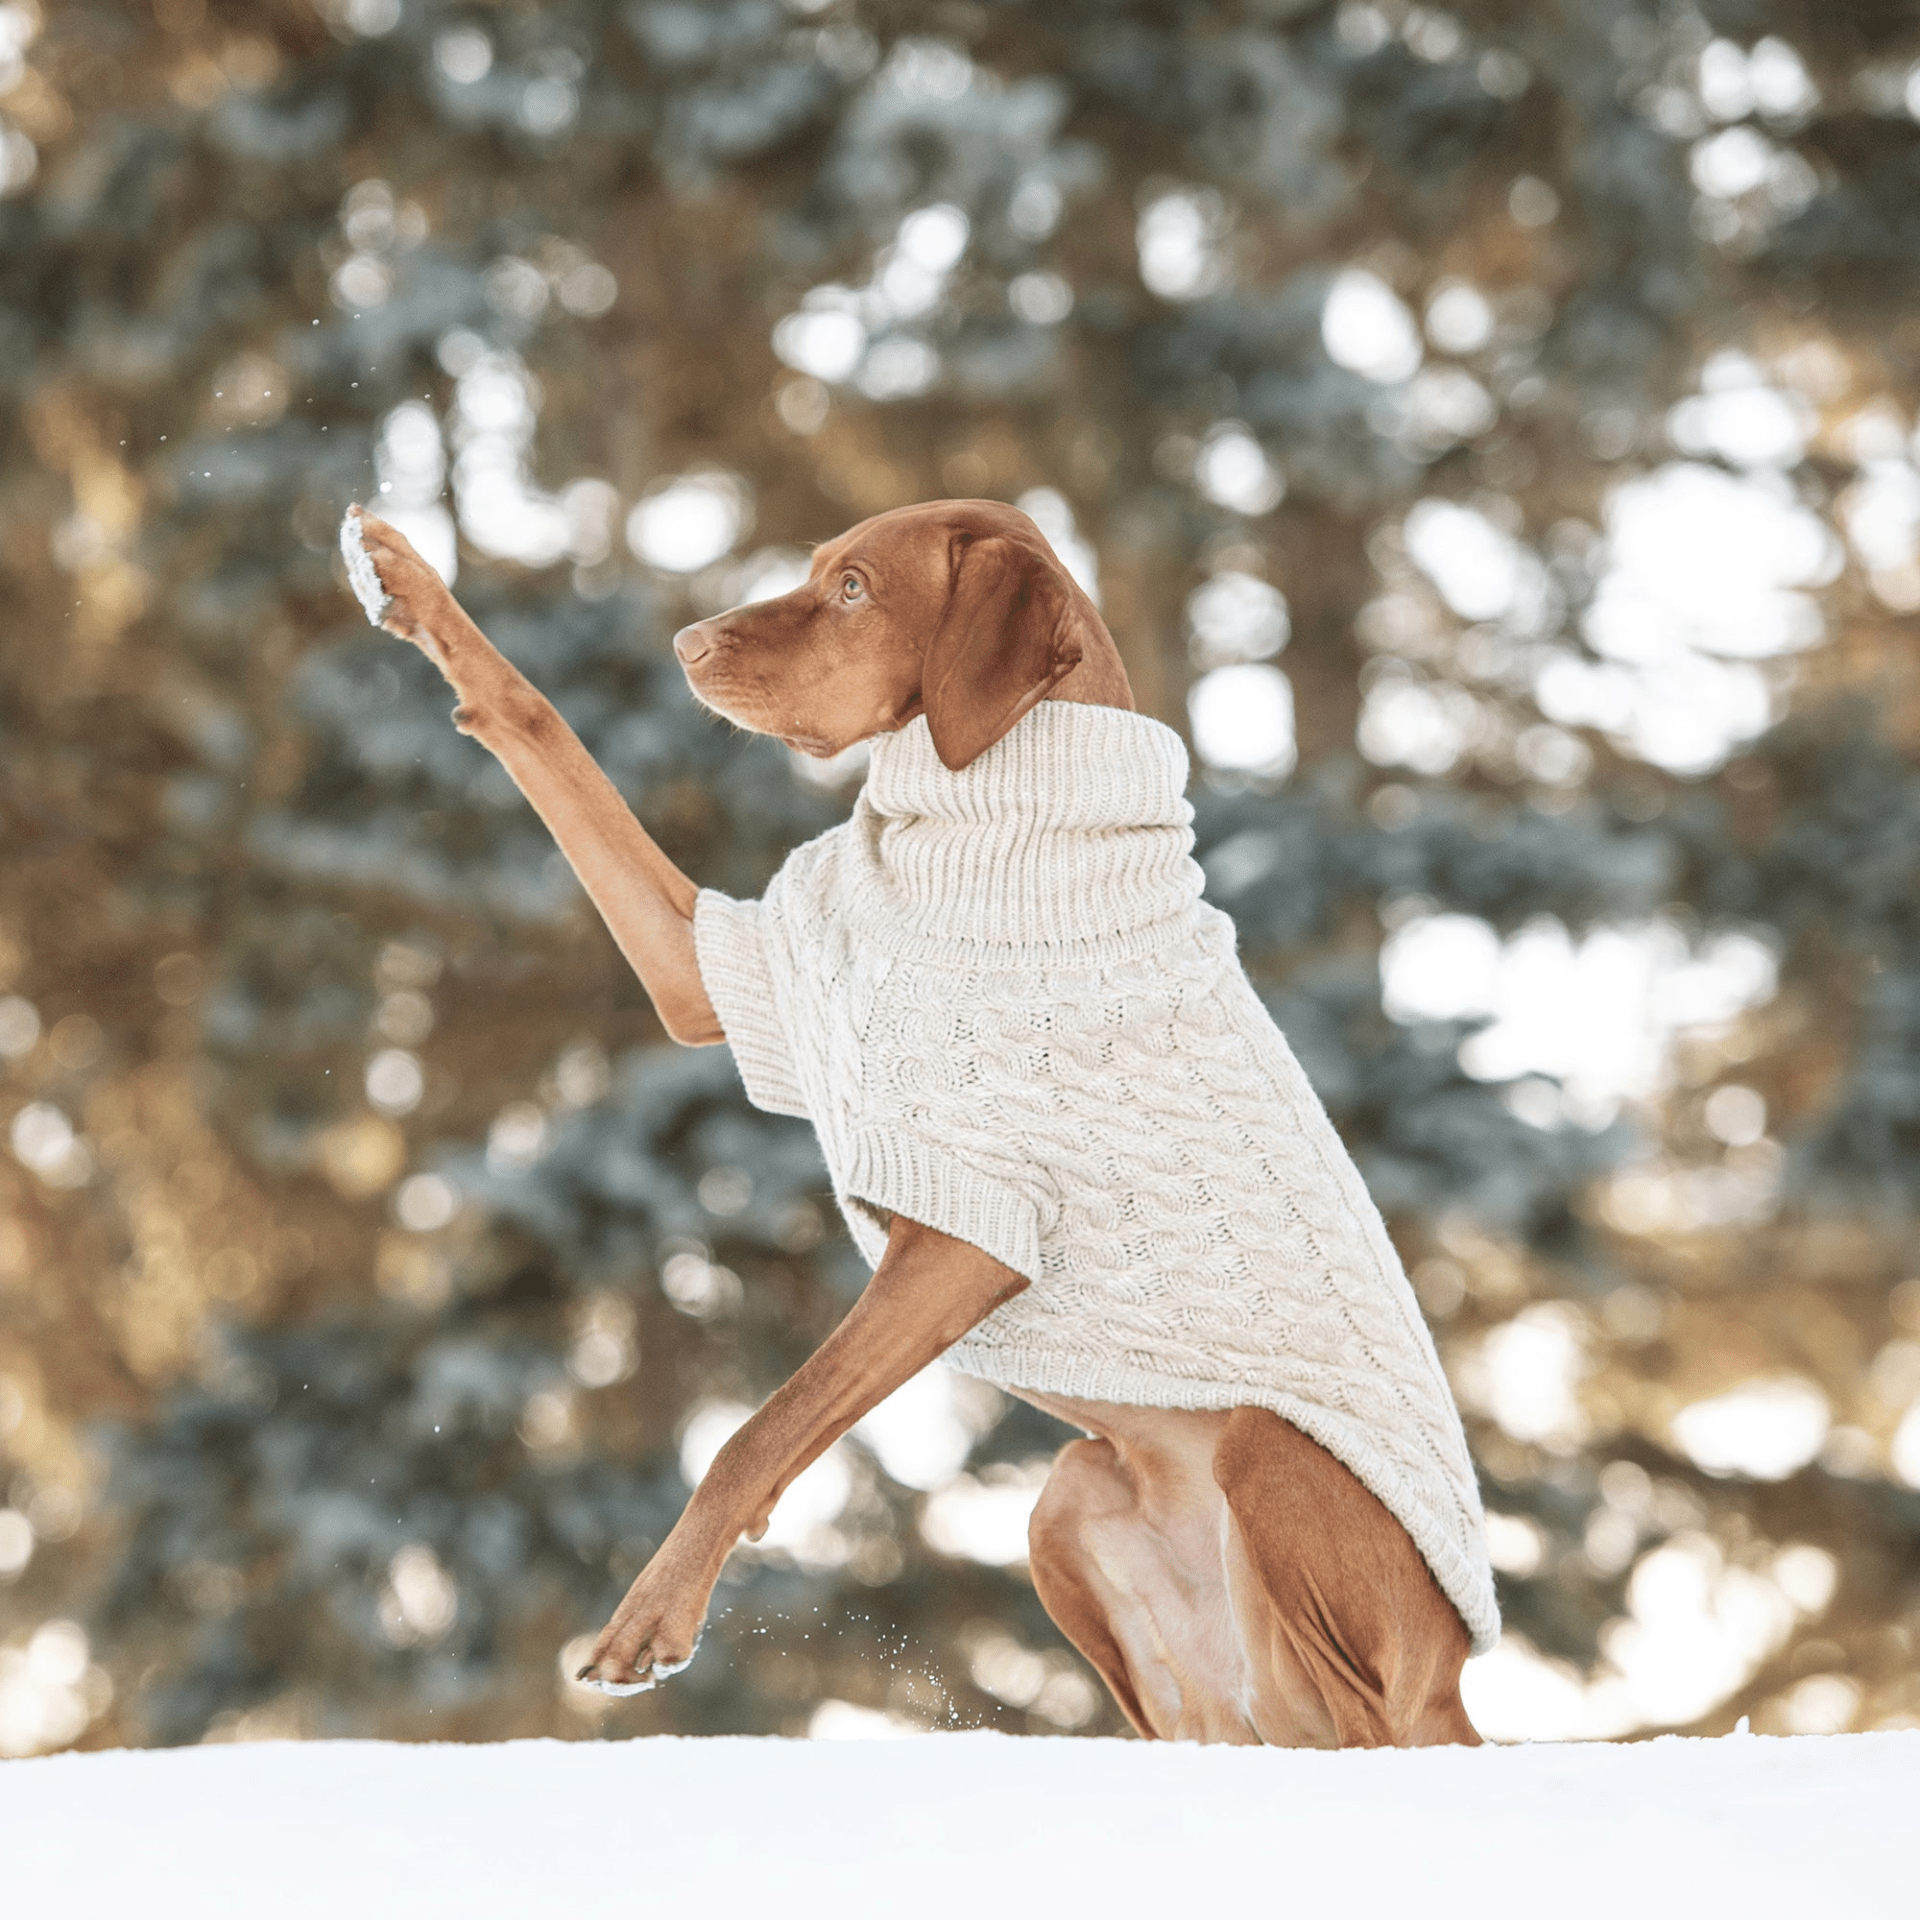 Dog and Pet Stuff Chalet Sweater - Oatmeal